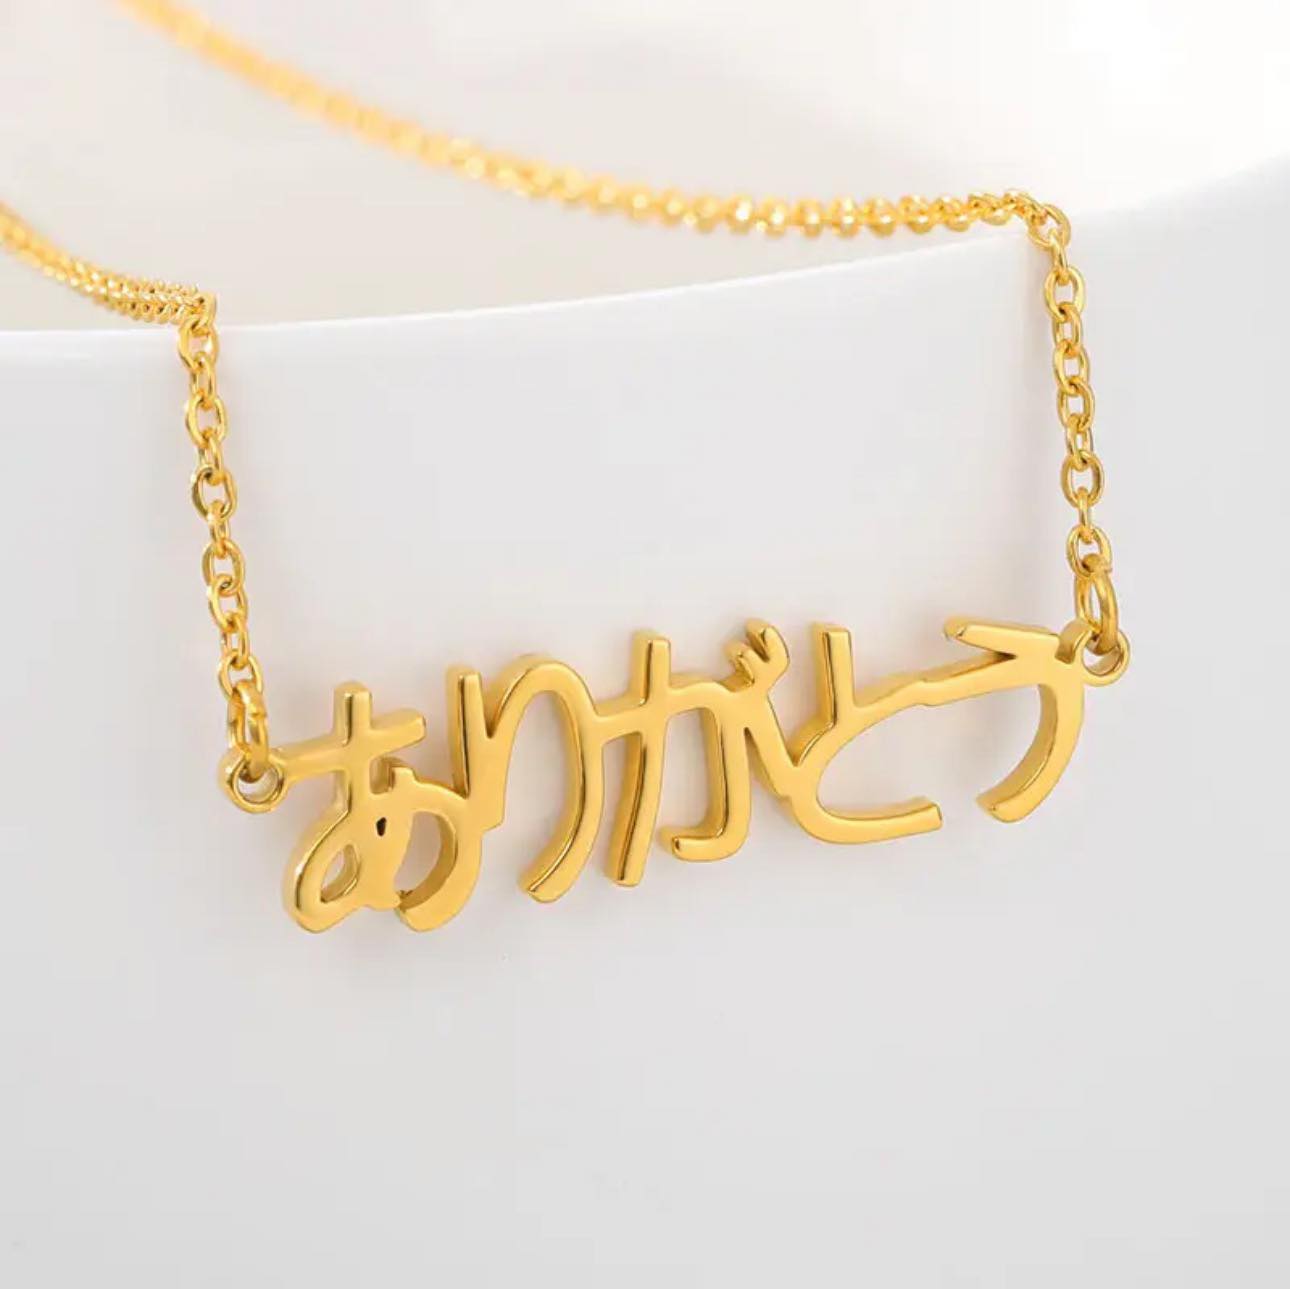 Japanese Custom Necklace